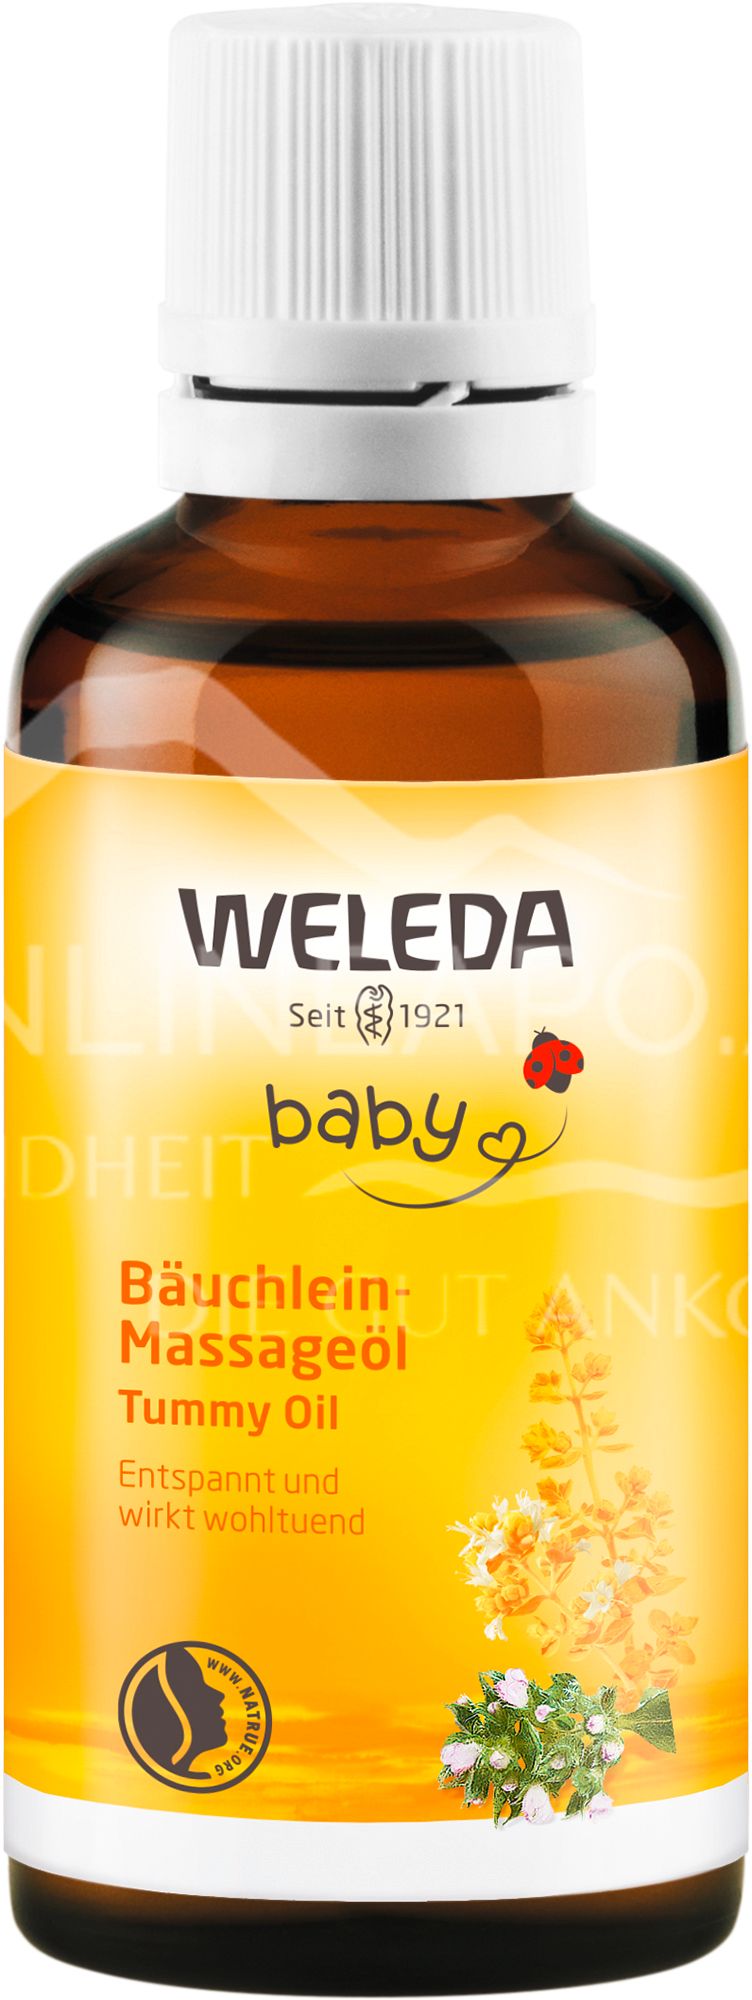 Weleda Bäuchlein-Massageöl